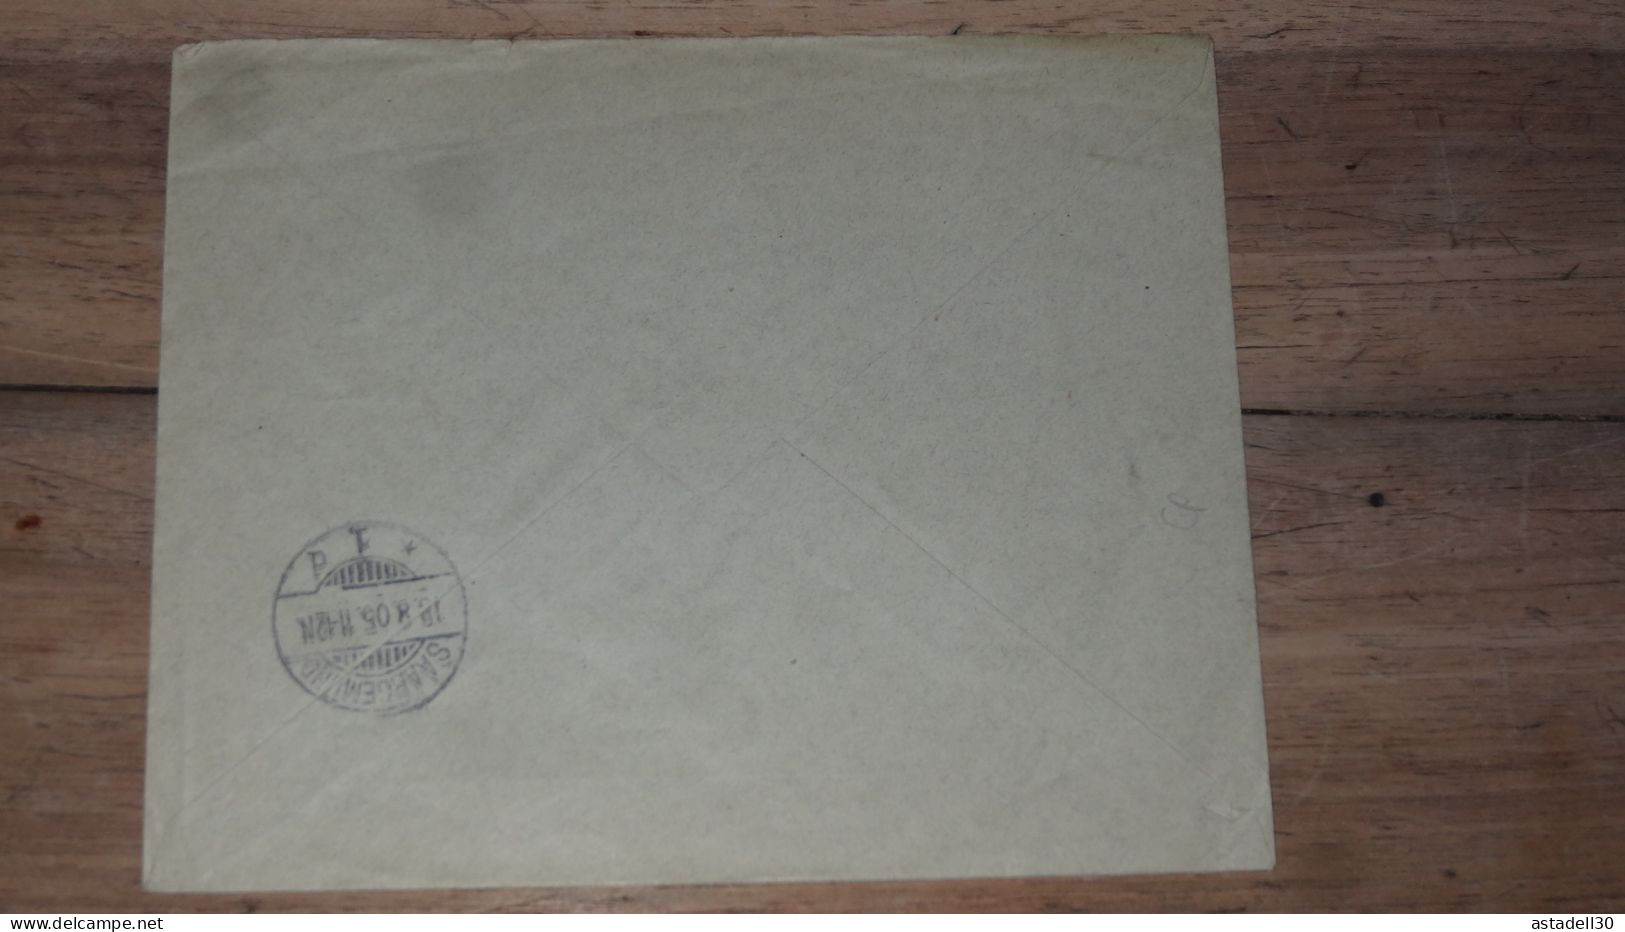 Enveloppe LEVANT, Tripoli Barbarie - 1905  ......... Boite1 ..... 240424-222 - Briefe U. Dokumente